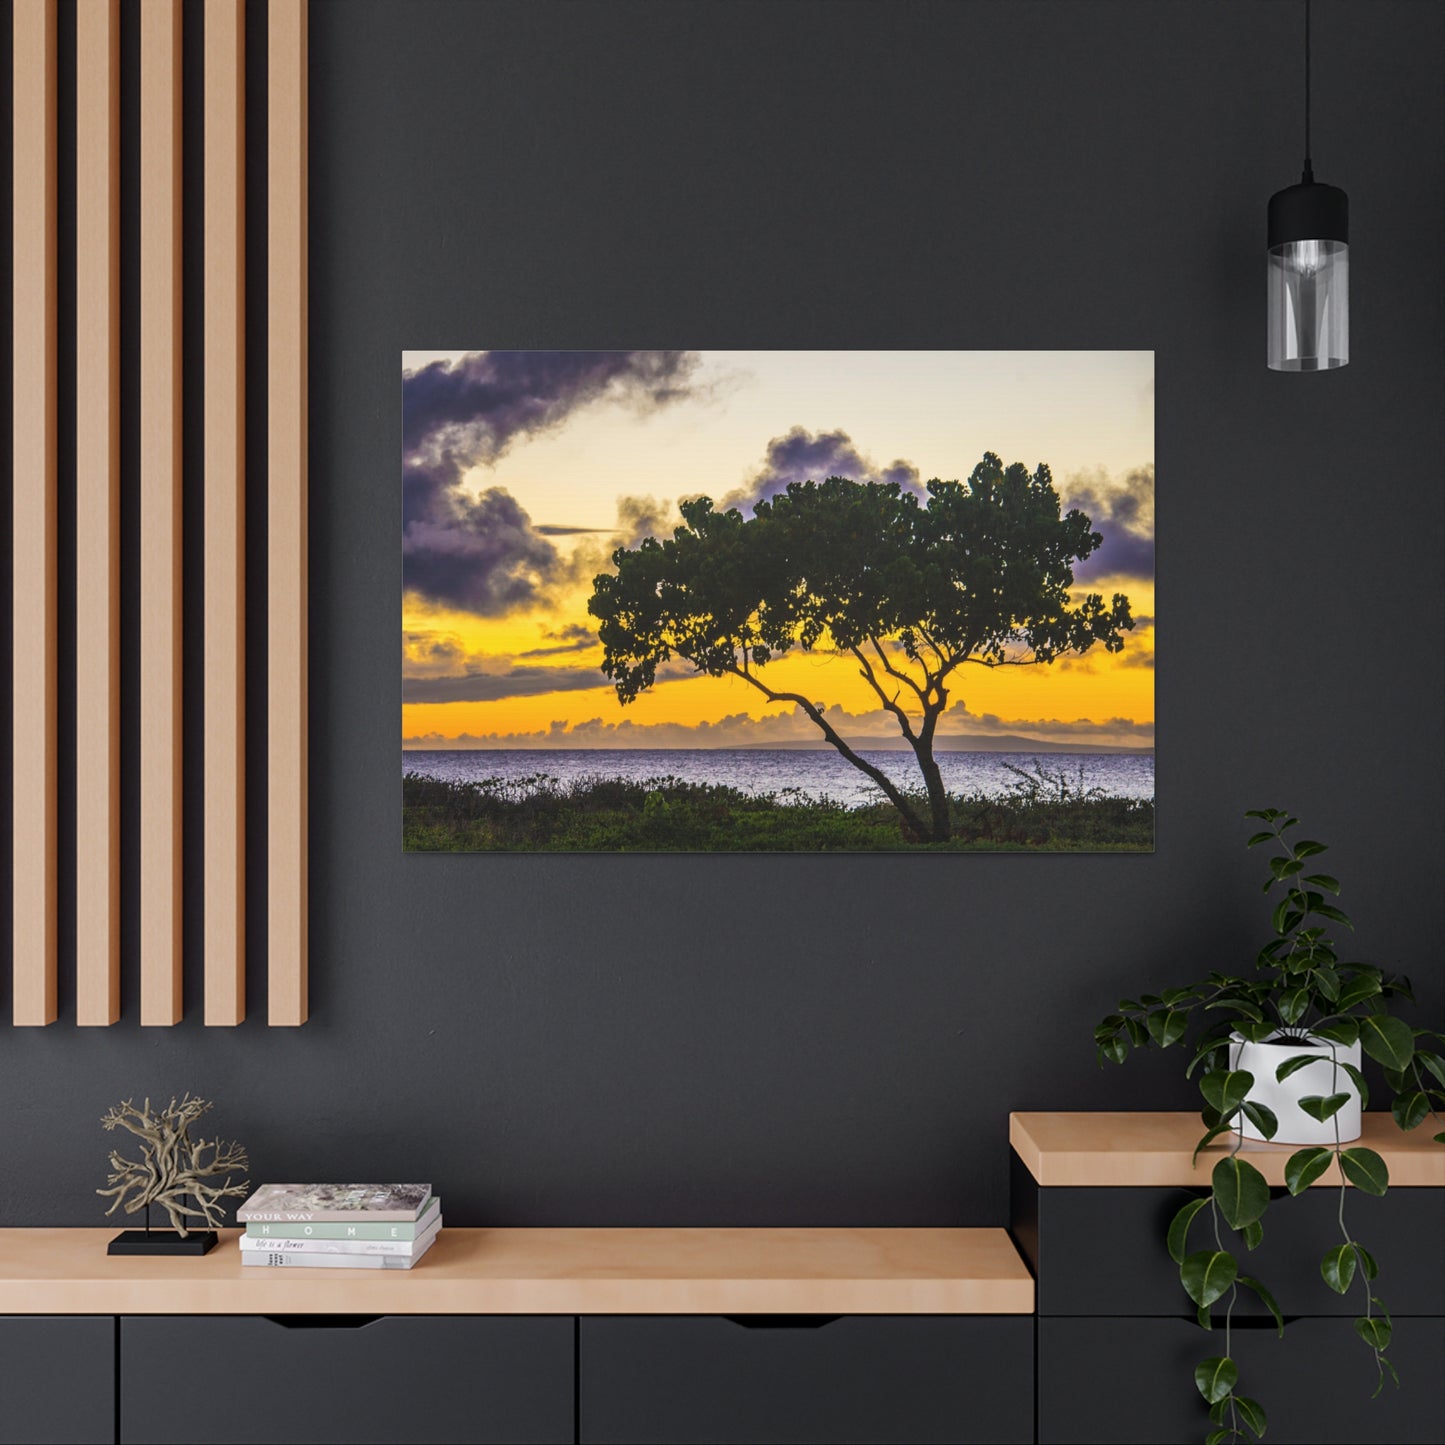 Canvas Print A Banyan Tree At Sunset In Hawaii For Wall Art